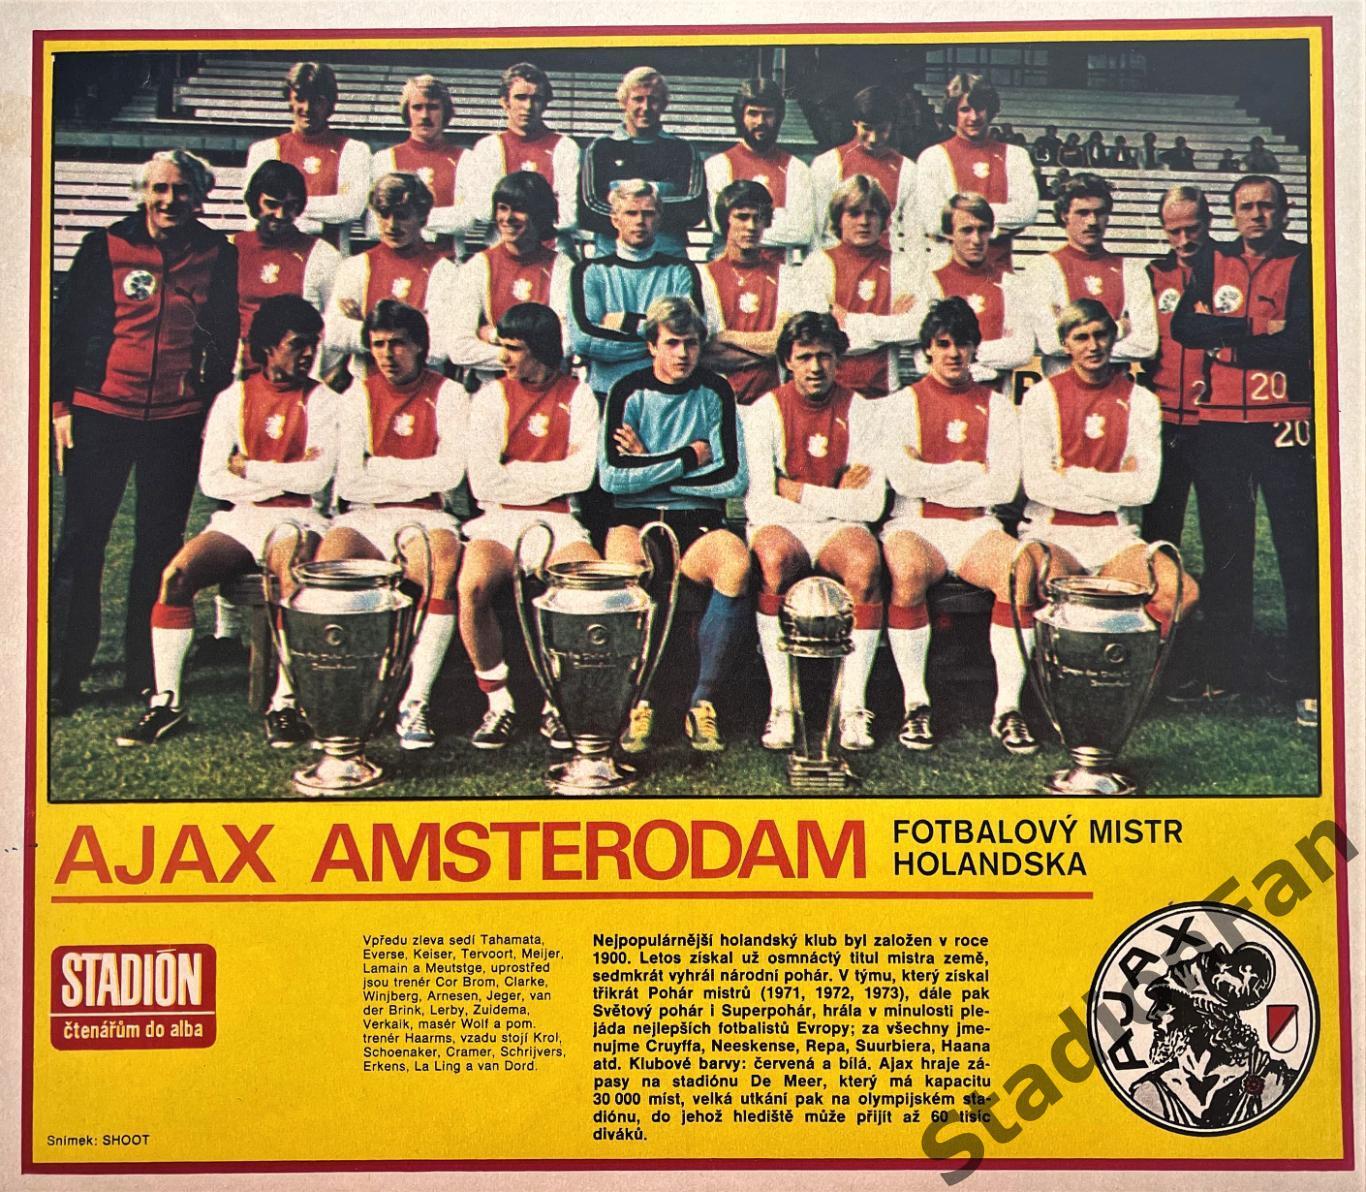 Постер из журнала Стадион (Stadion) - Ajax Amsterdam, 1979.